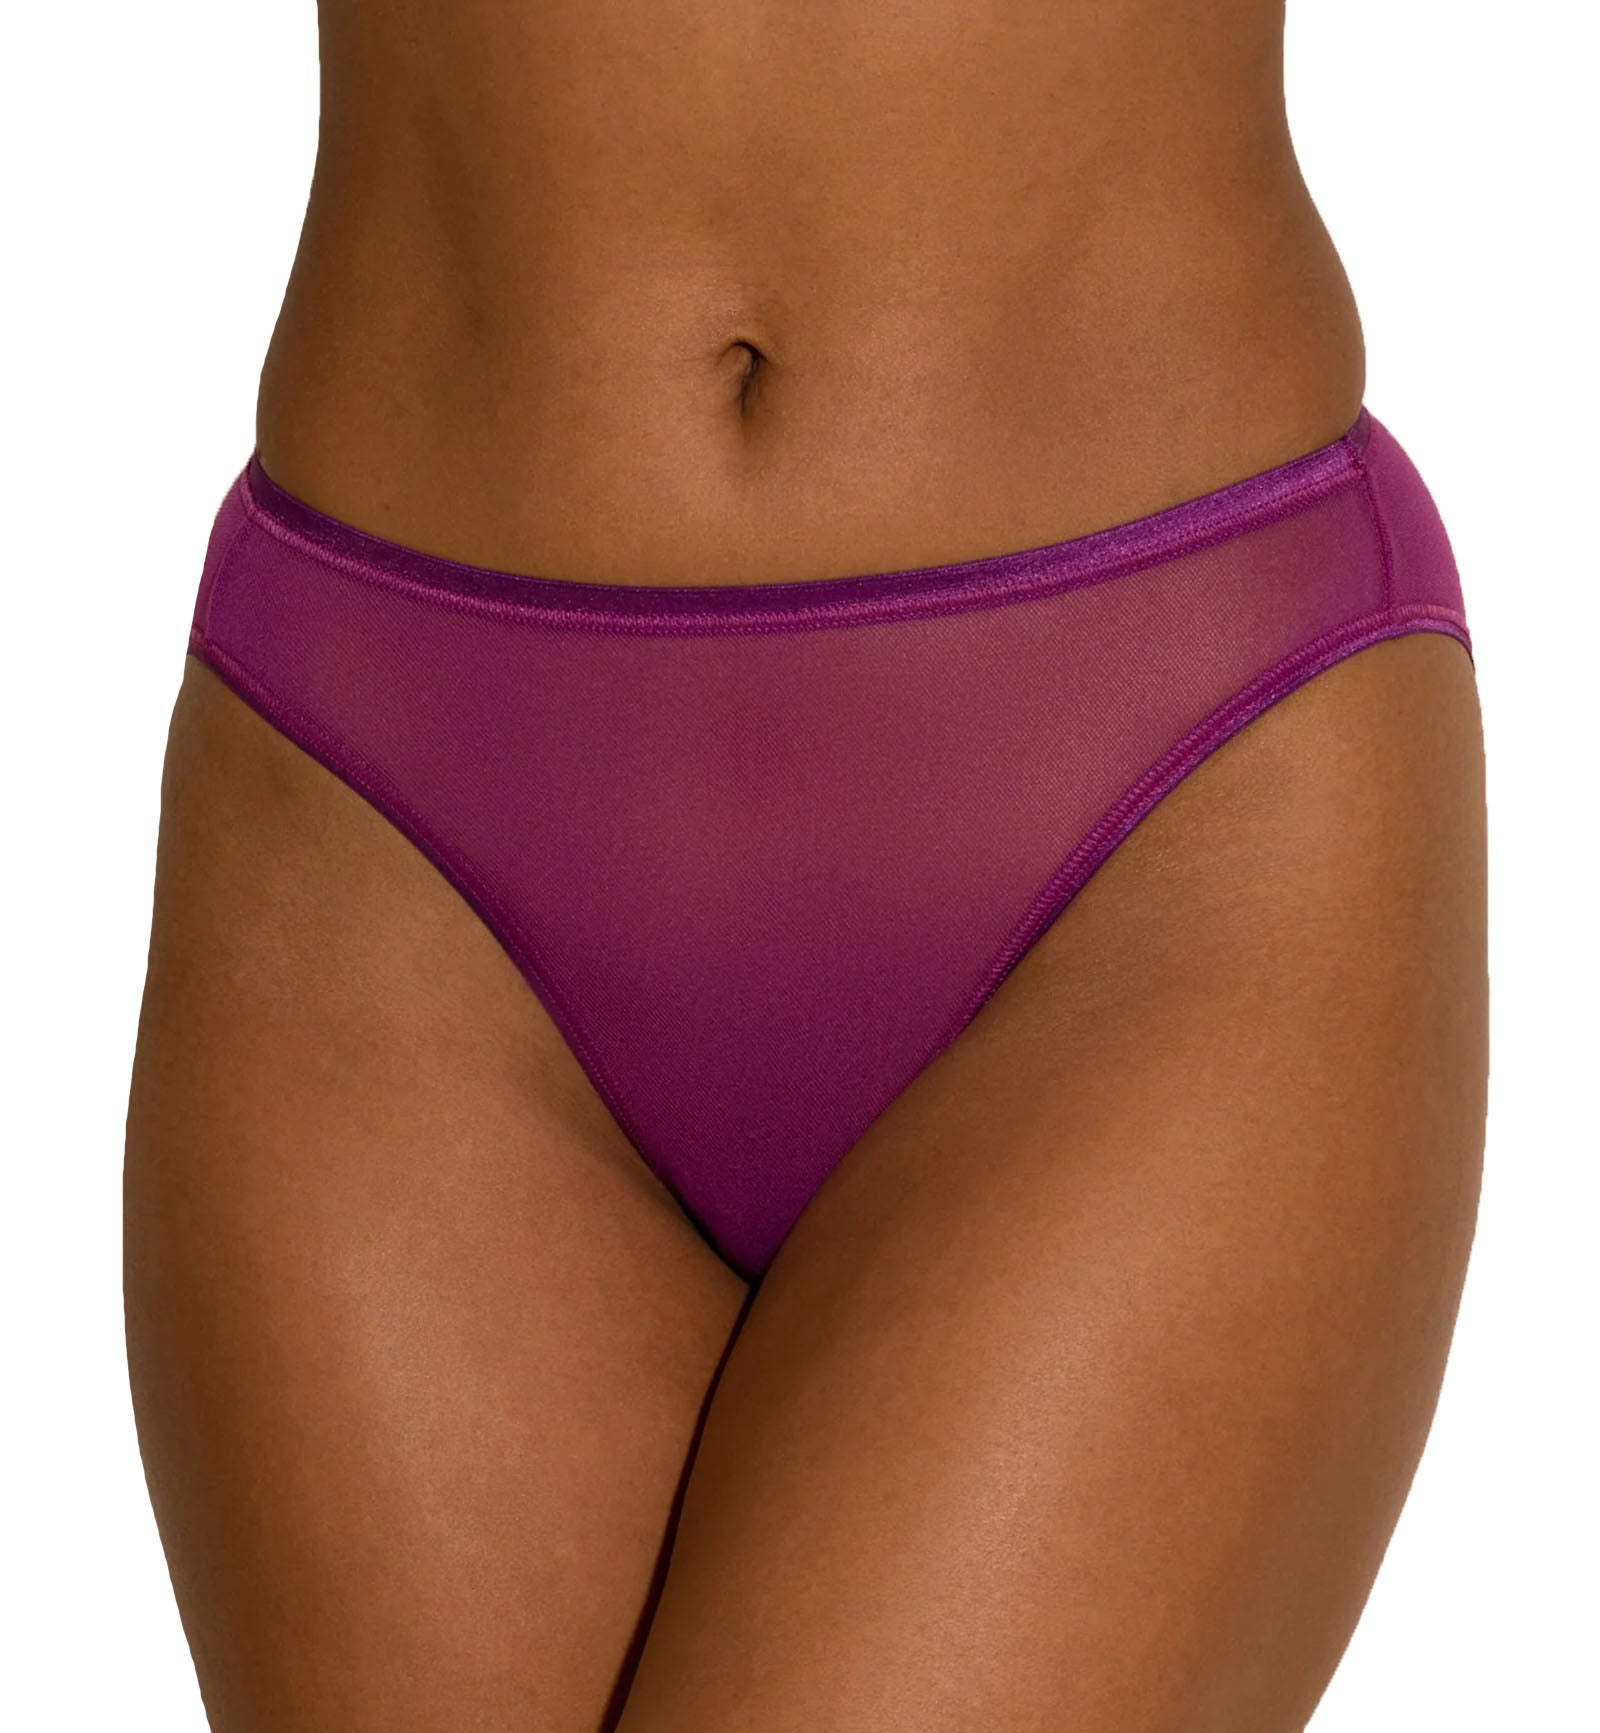 Cosabella Soire Confidence High Waist Bikini Panty (SOIRC0561),Small,Swiss Beet - Swiss Beet,Small